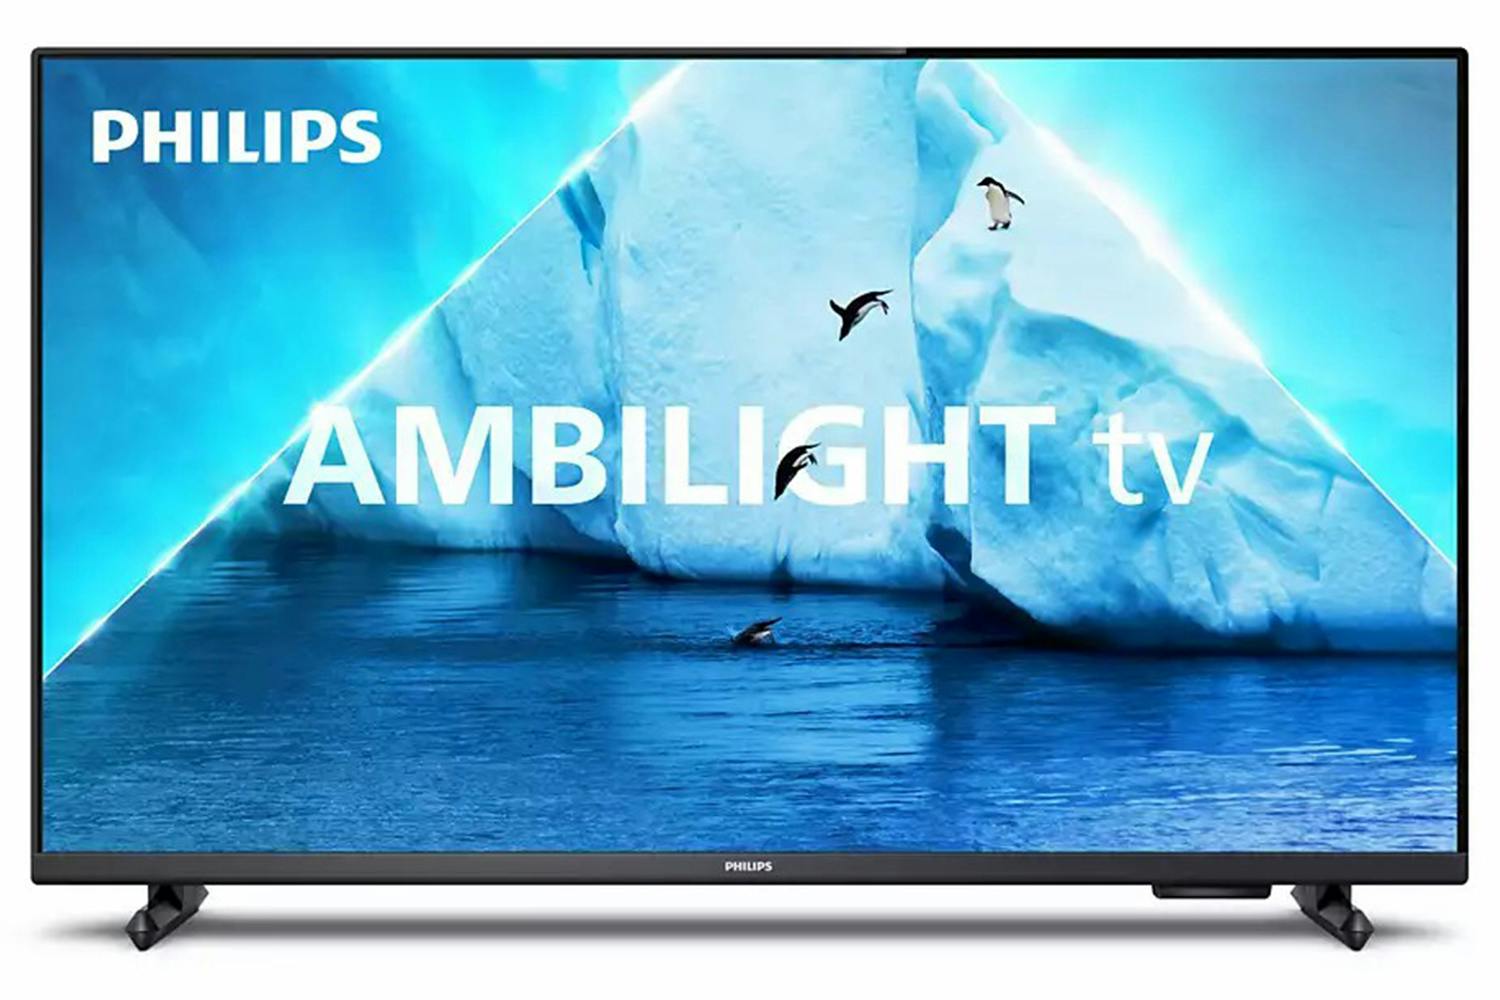 Smart Tv Philips 32 Hd Google Phd6918